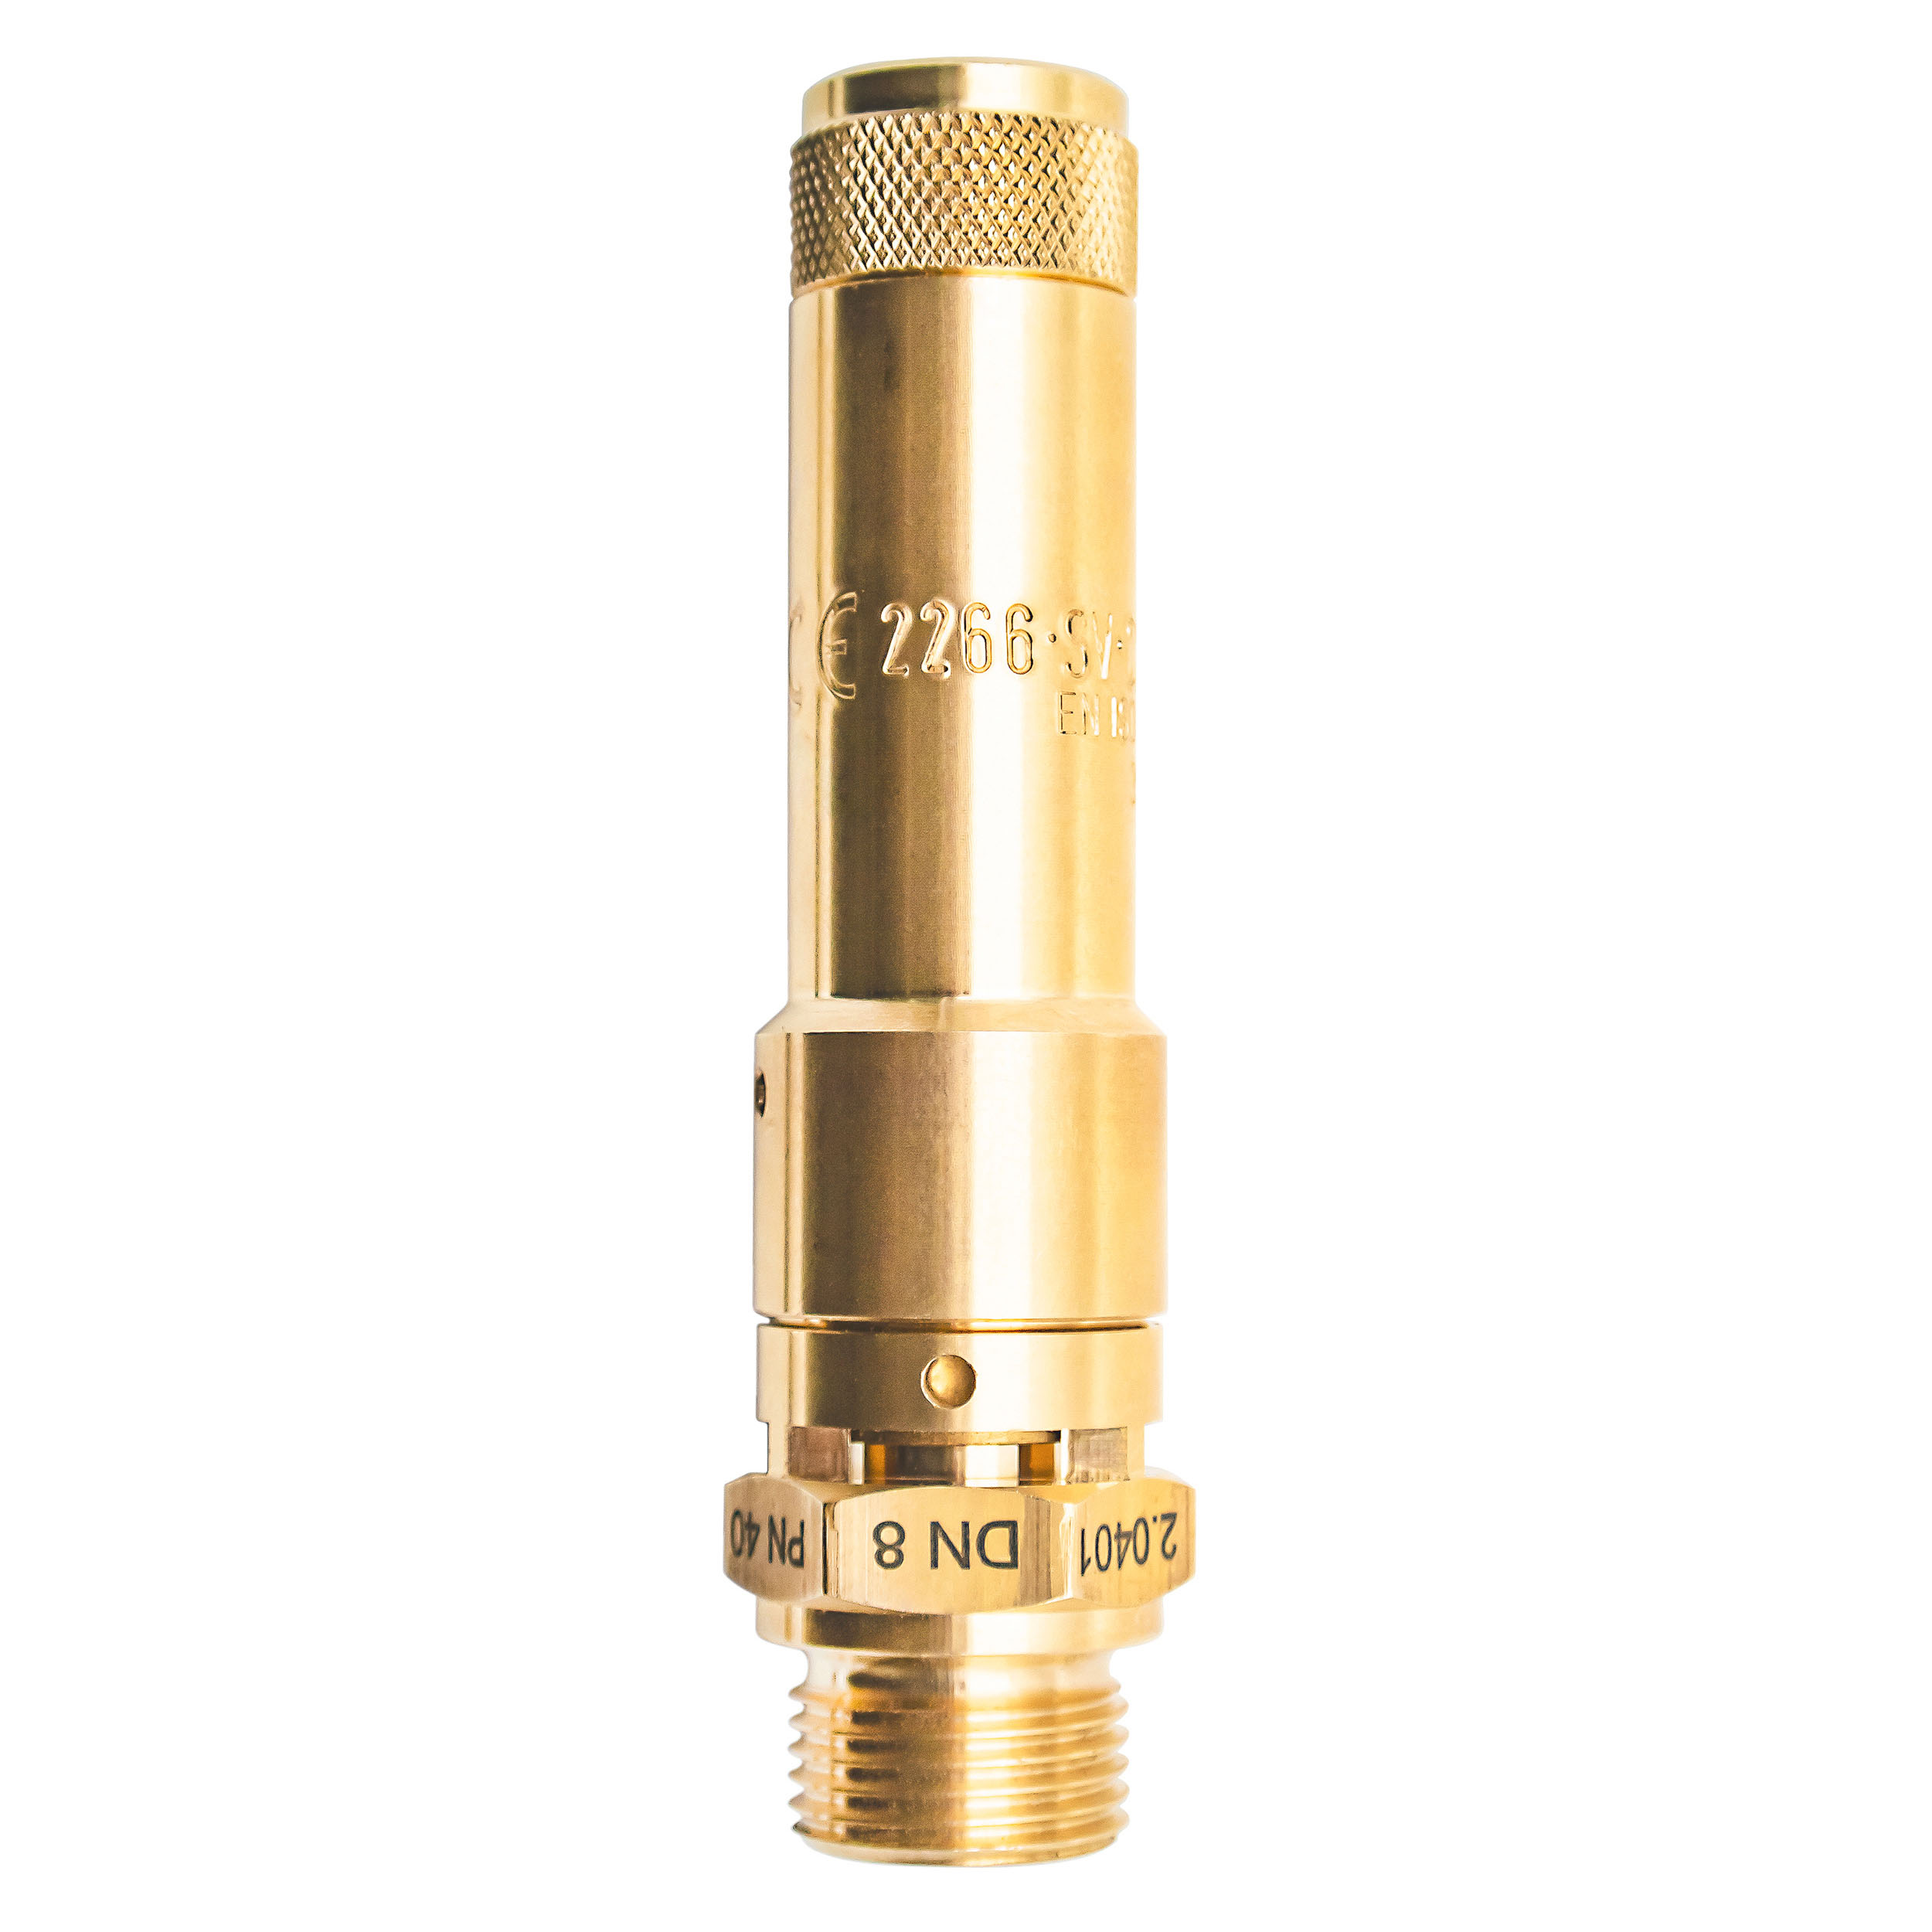 Component-tested safety valve DN 8, G¼, pressure: 7.1-9 bar